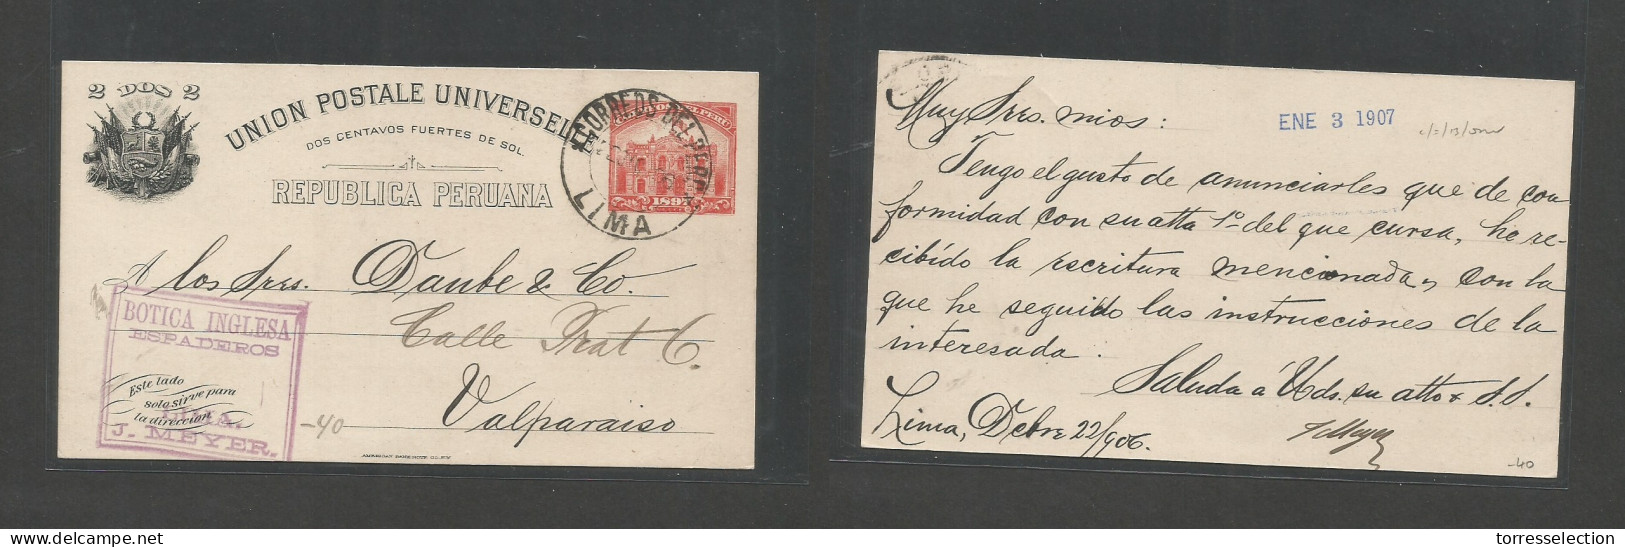 PERU. 1906 (Dec 22) Lima - Chile, Valparaiso (3 Enero 1907) 2c Black / Red Stat Card. Botica Inglesa Esparderos Violet C - Pérou